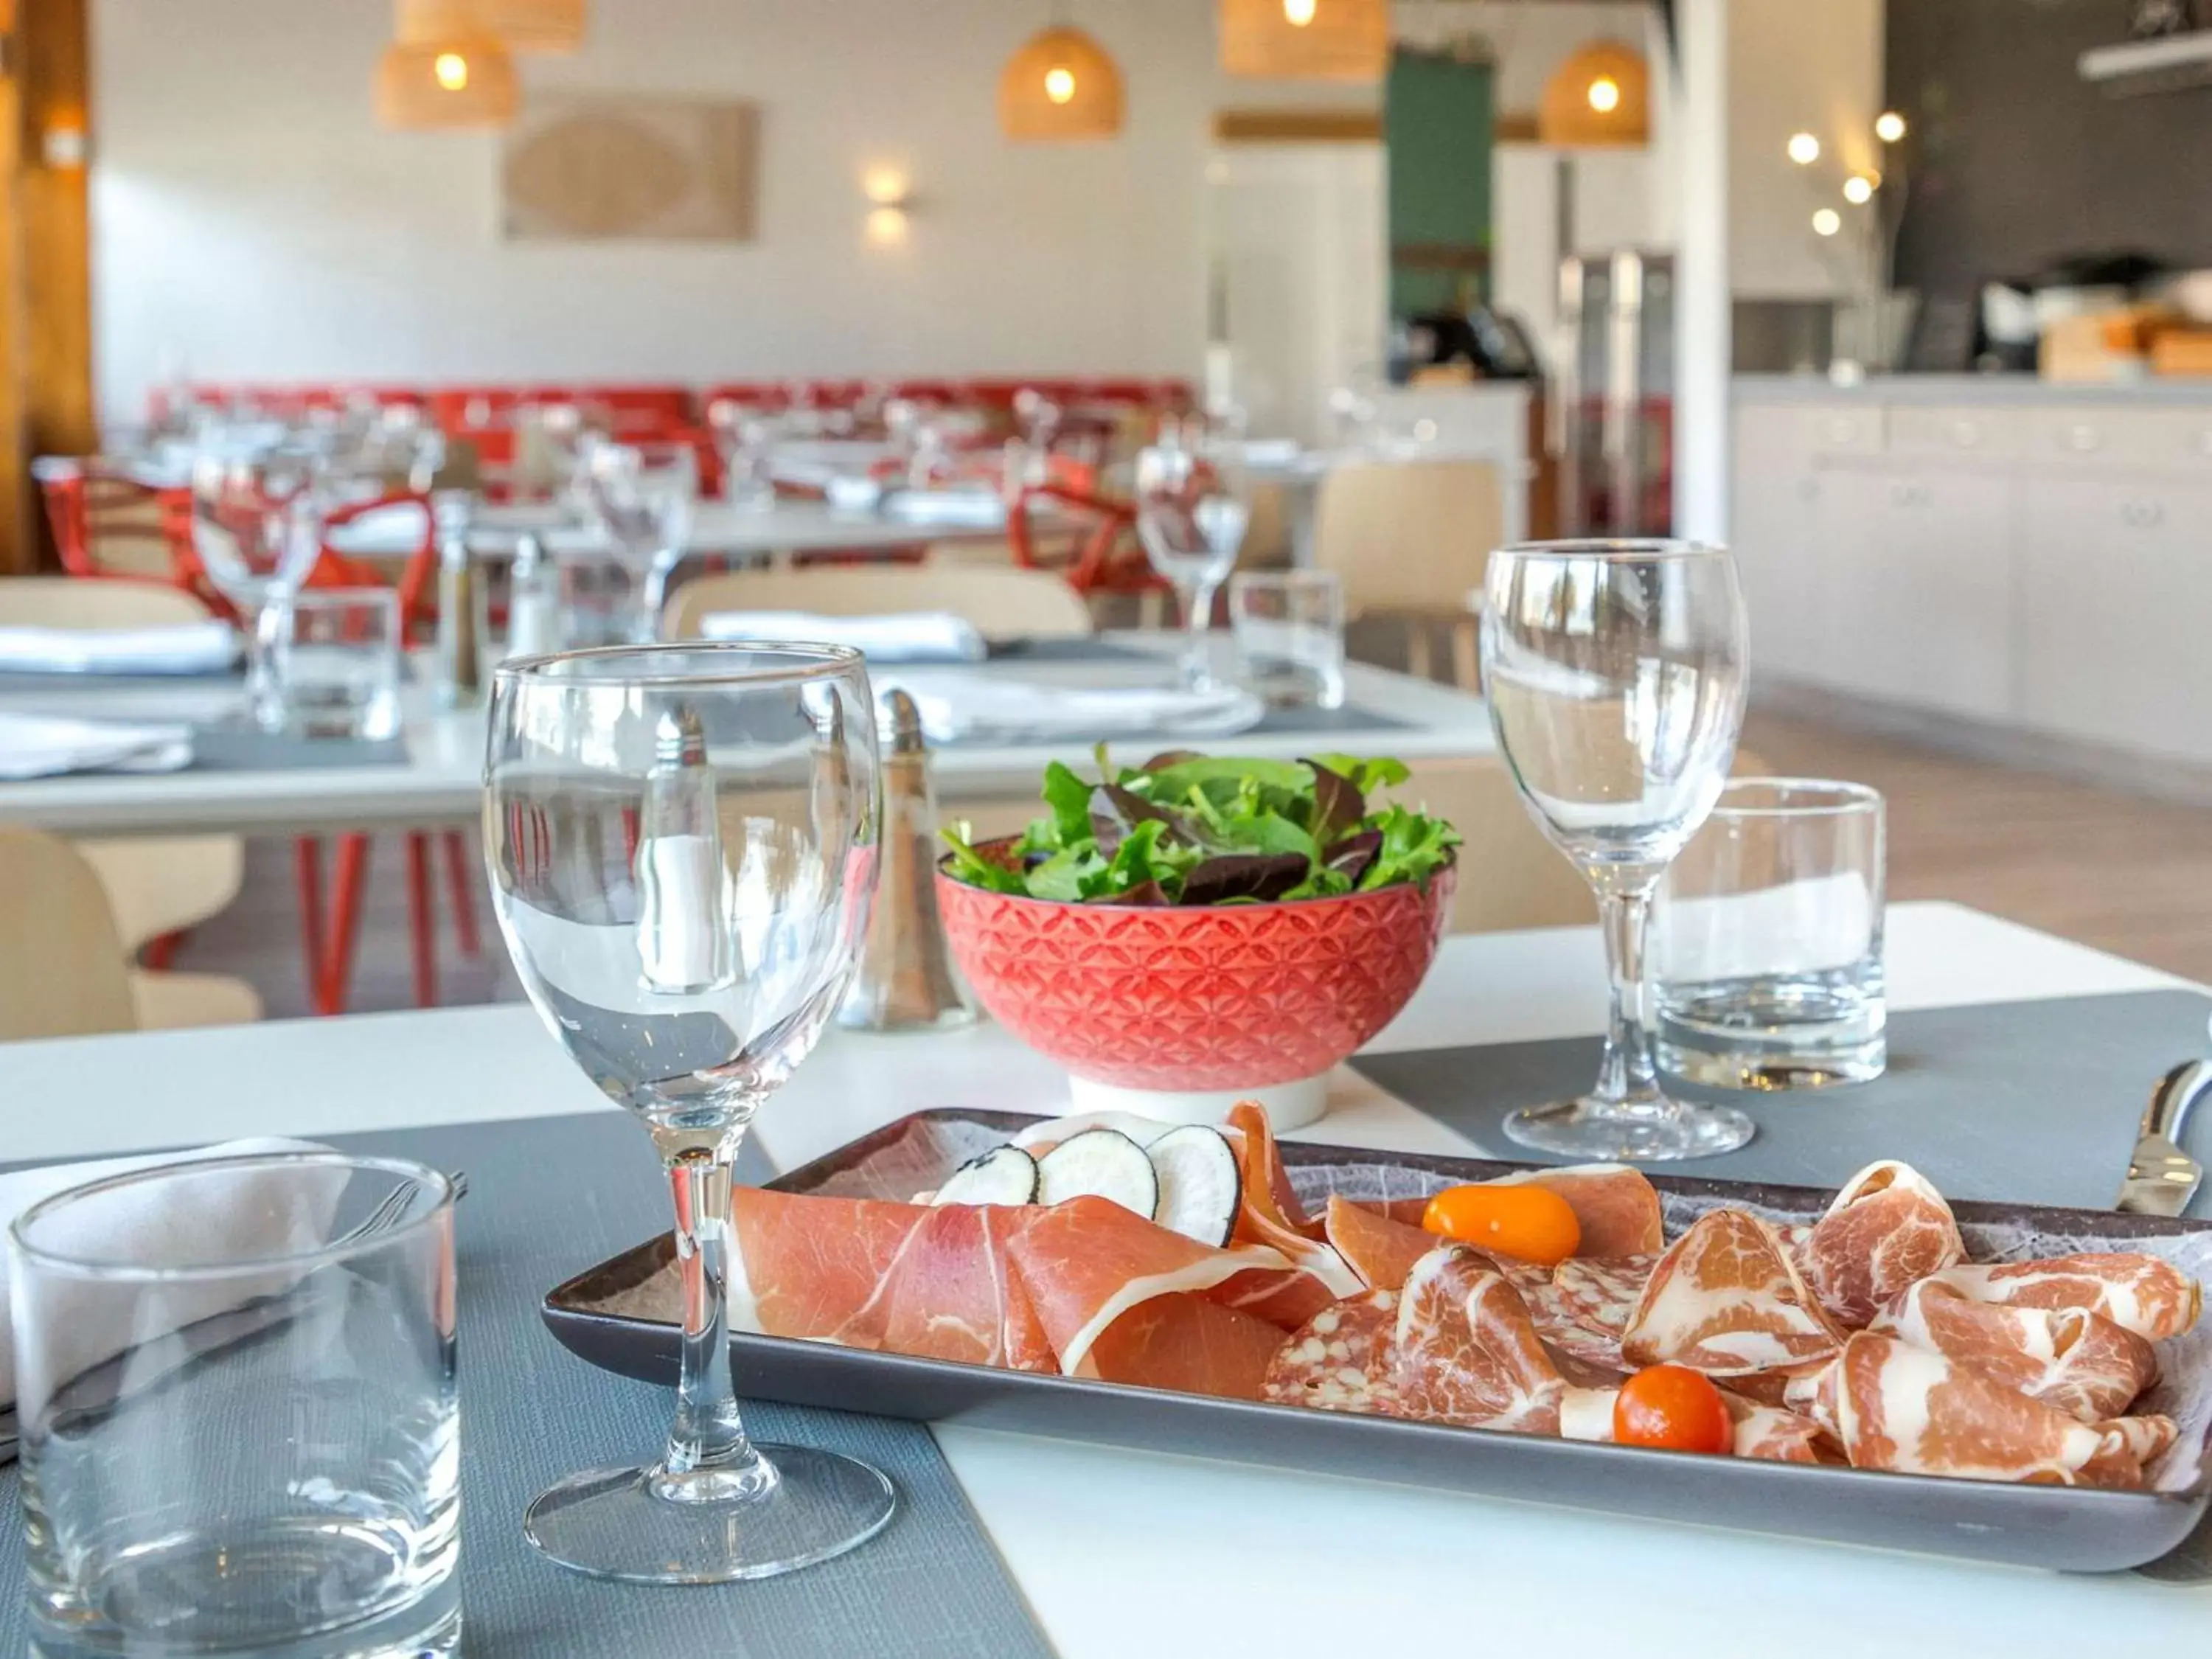 Restaurant/Places to Eat in Novotel Perpignan Nord Rivesaltes